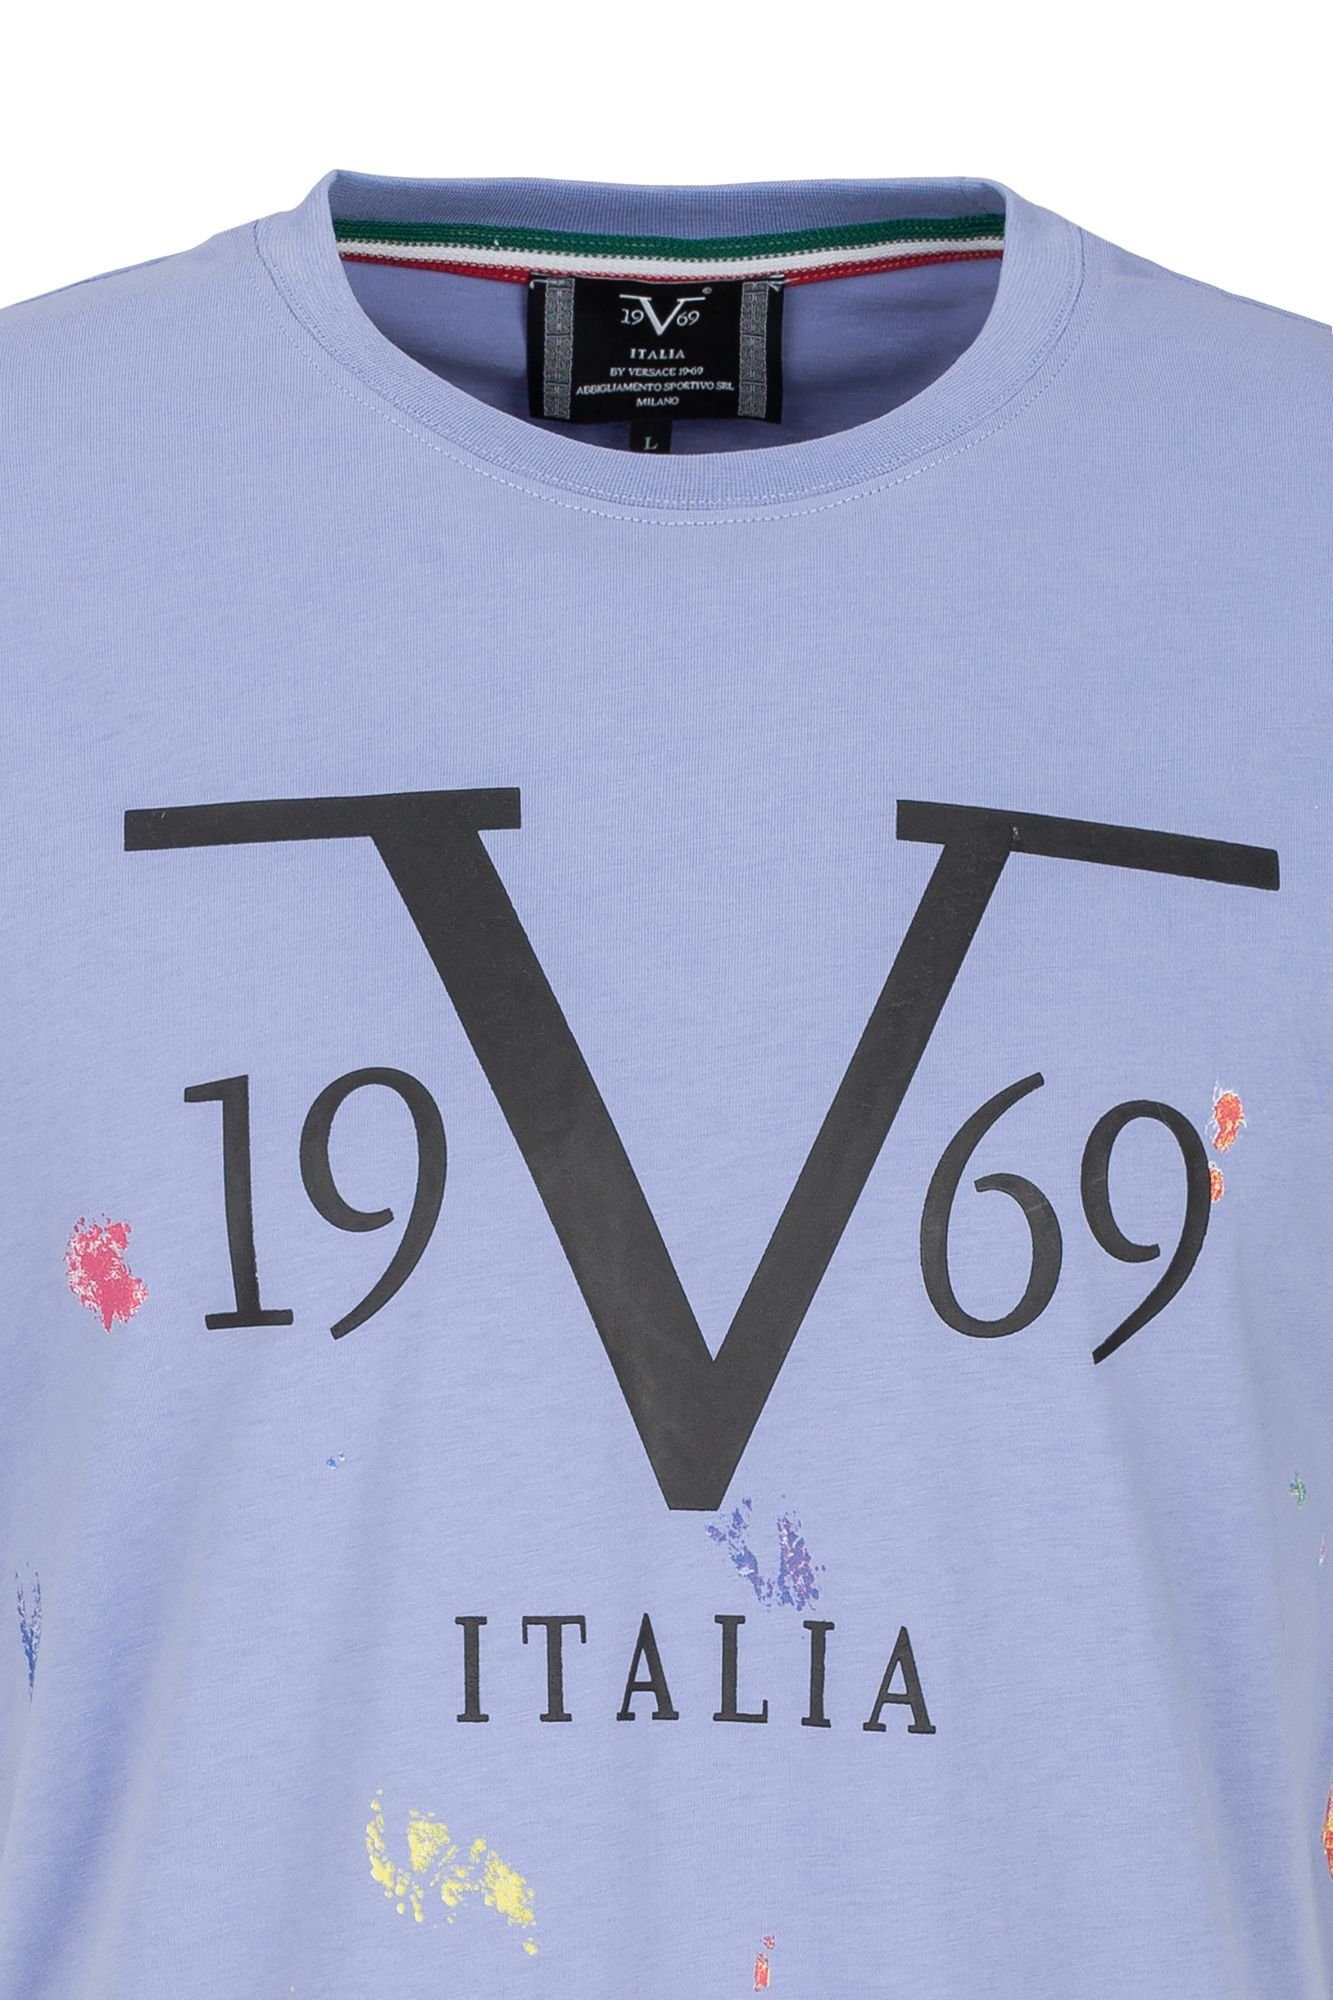 Rundhalsshirt by 19V69 Versace - SRL by Leonardo Sportivo Italia Versace